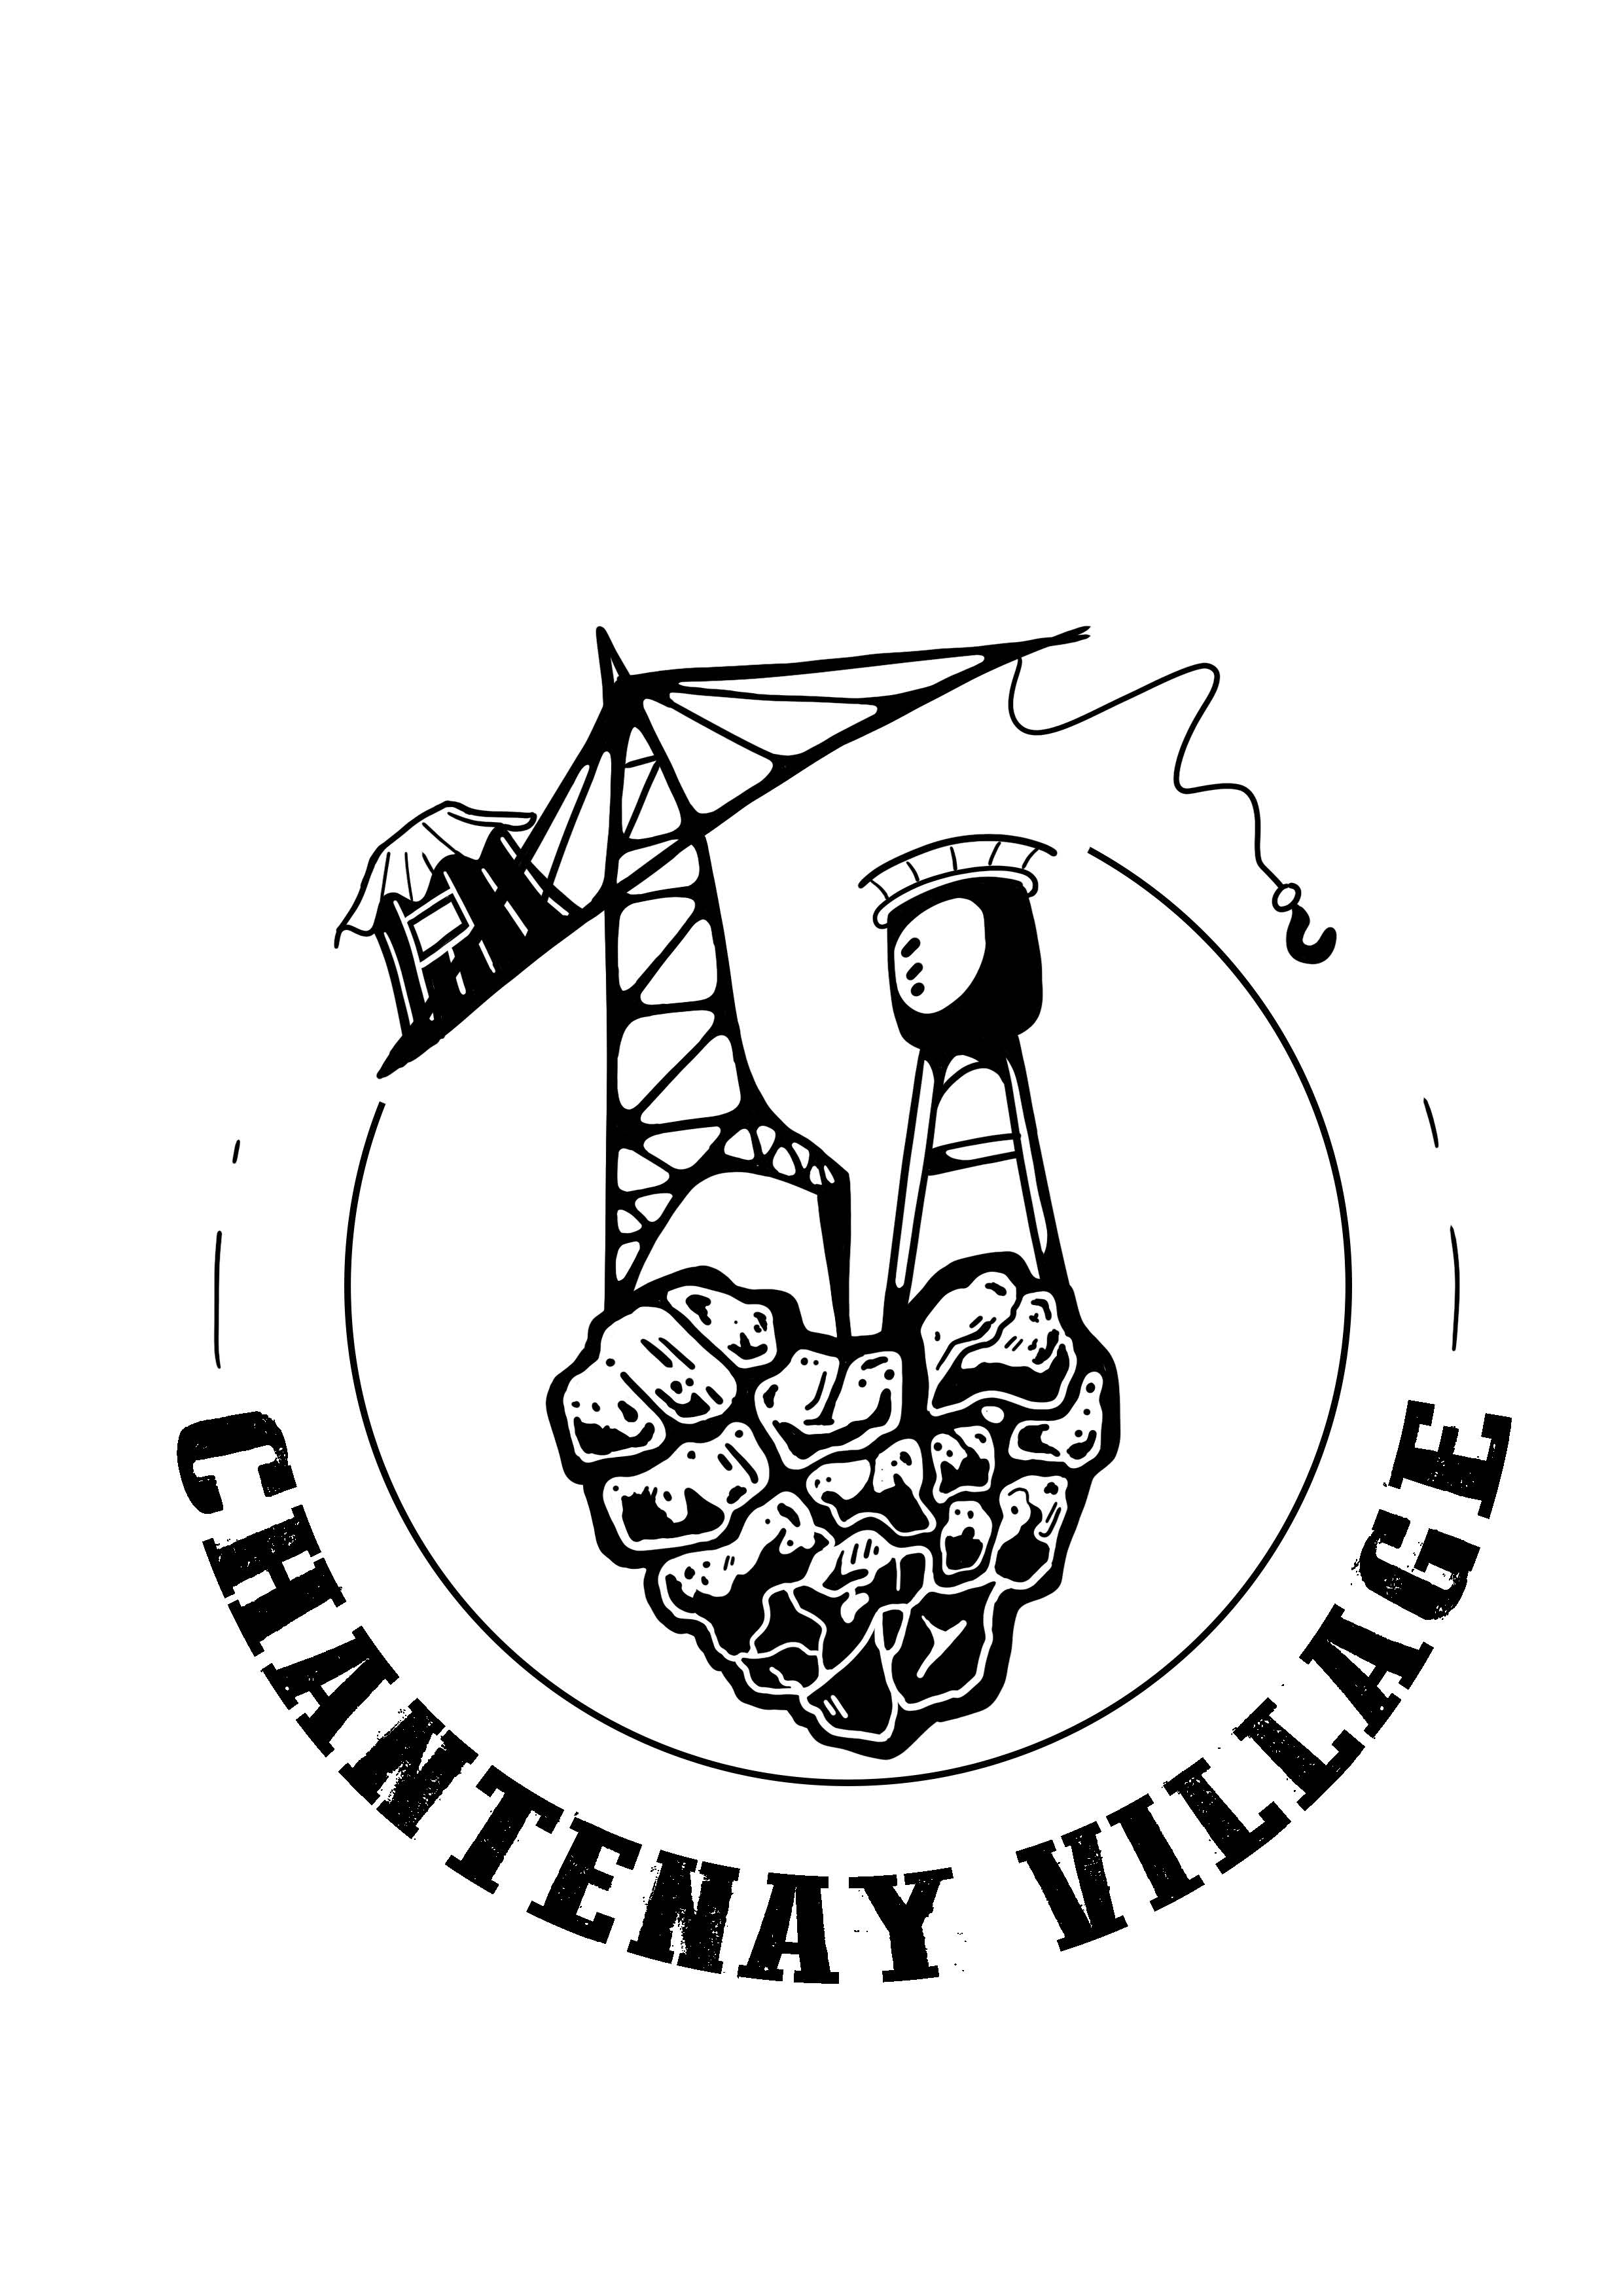 Chantenay Village